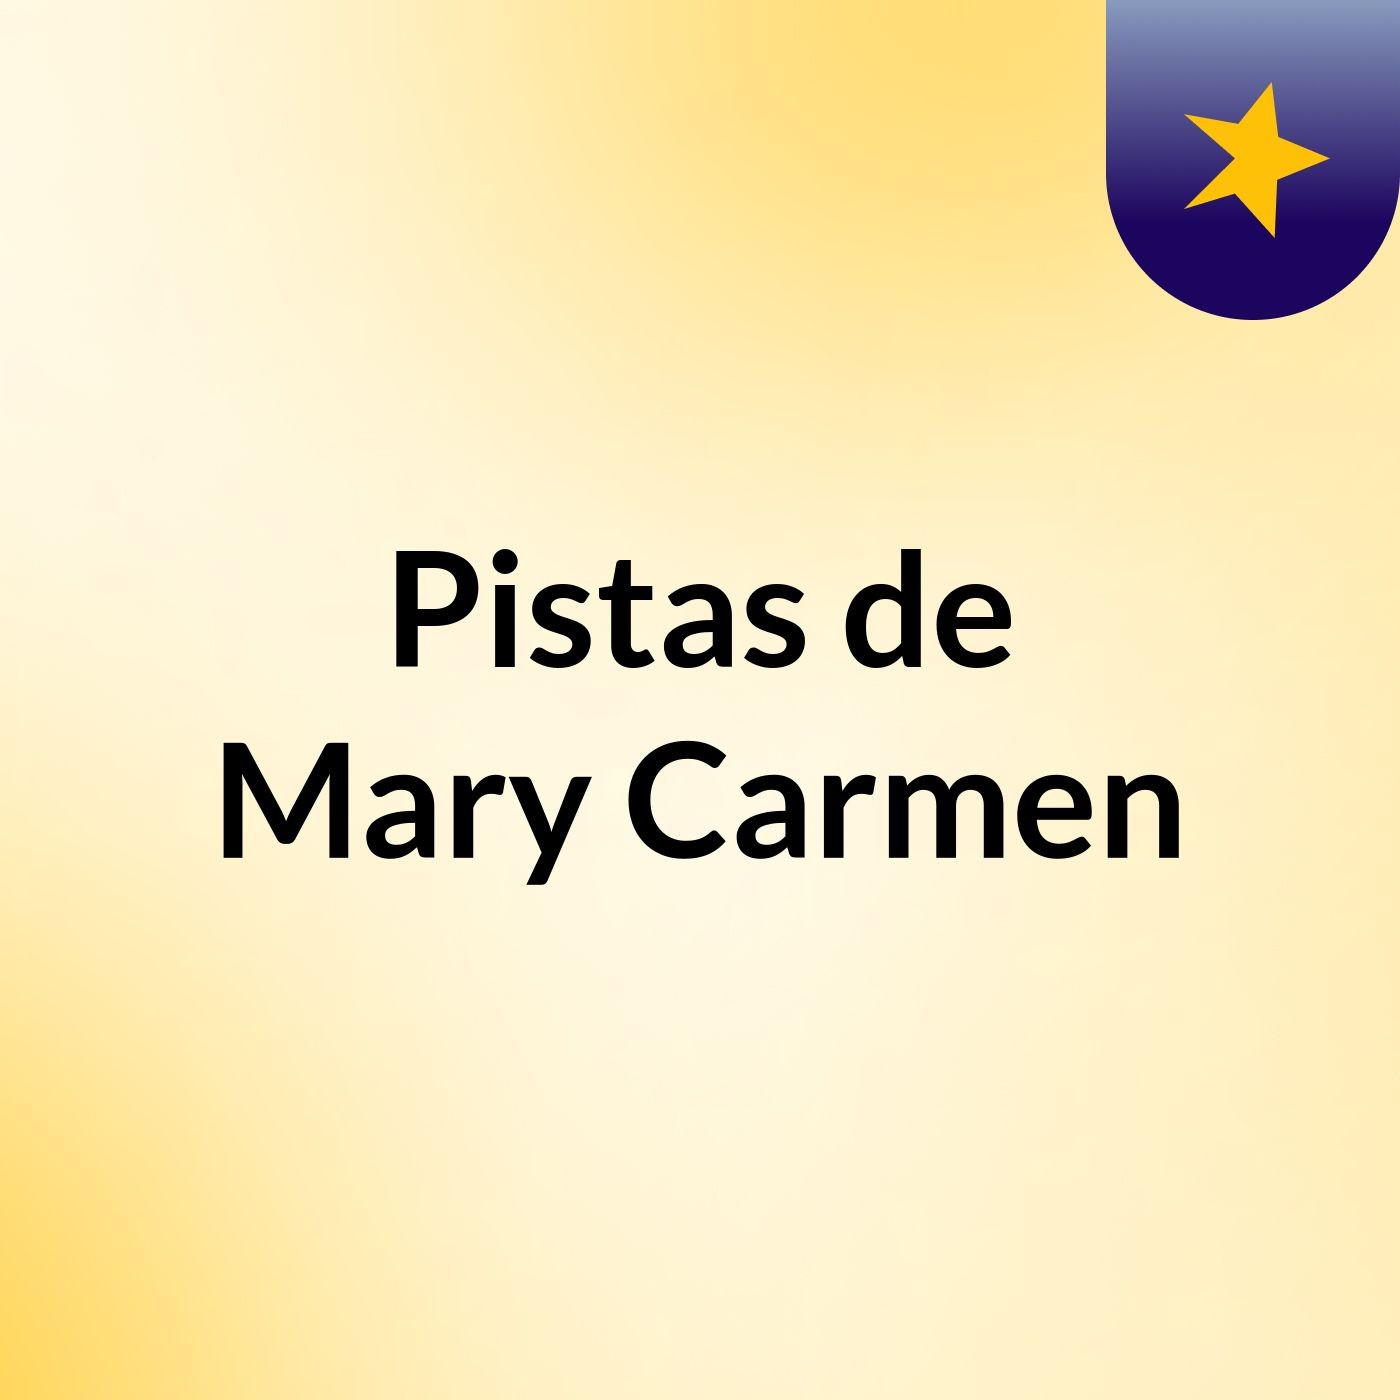 Pistas de Mary Carmen